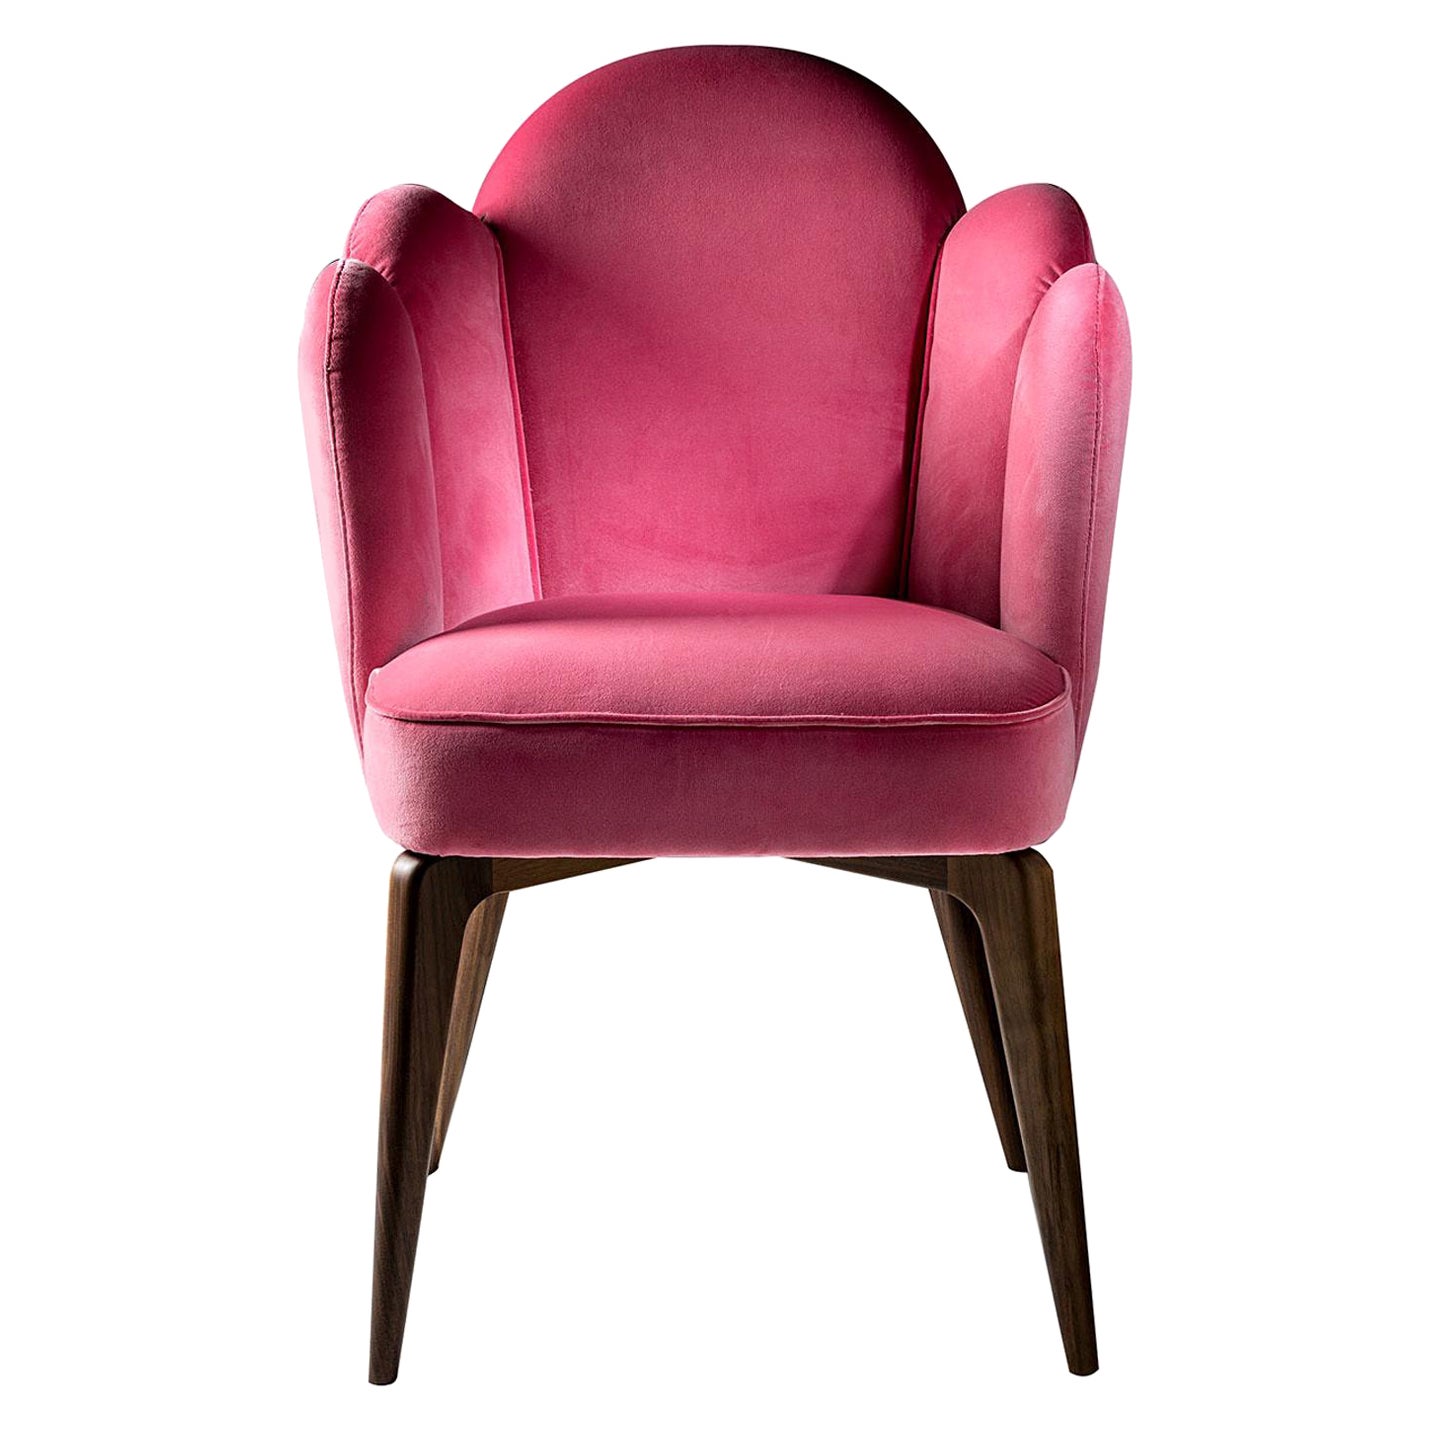 Small Flora chair by Giovanna Azzarello